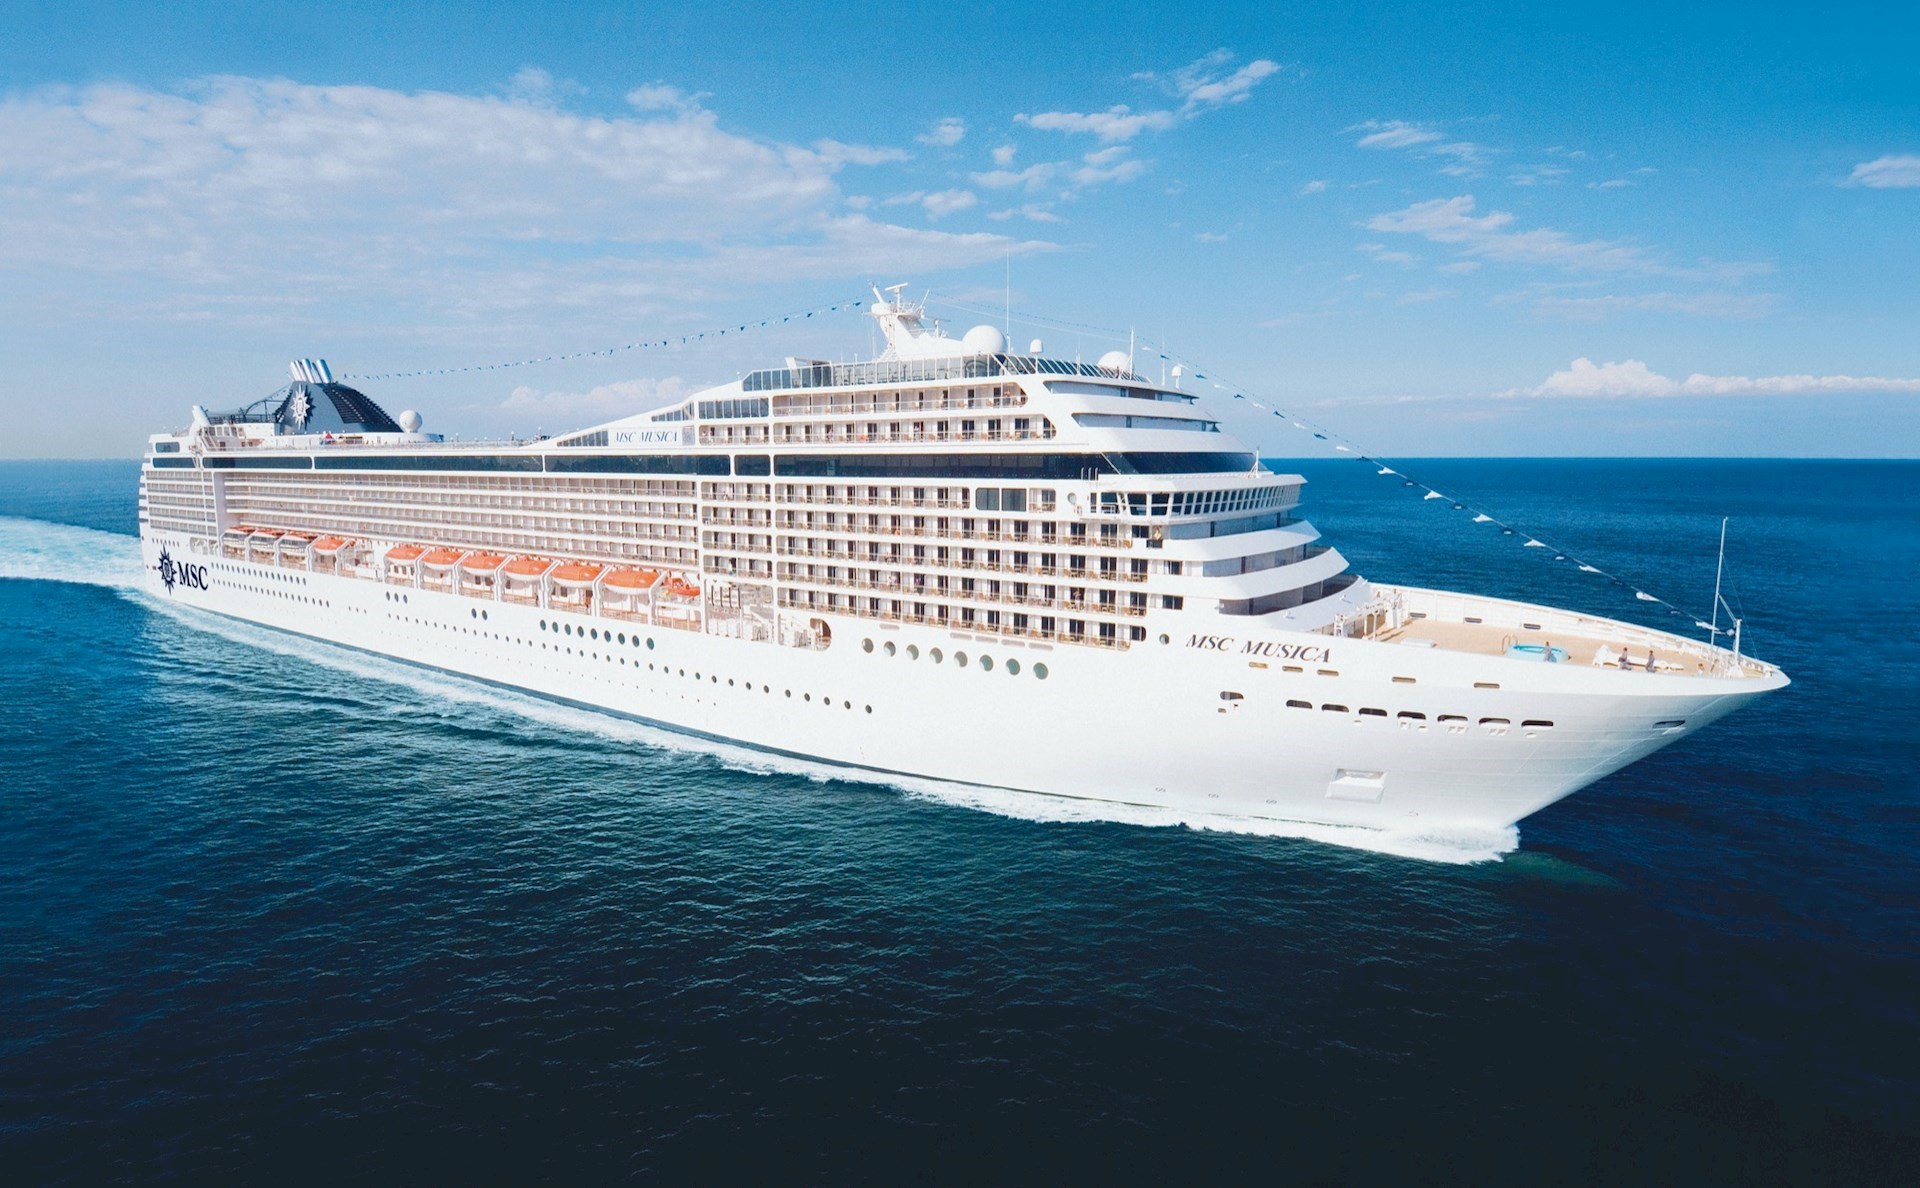 MSC Orchestra Cruise Ship 2022 / 2023